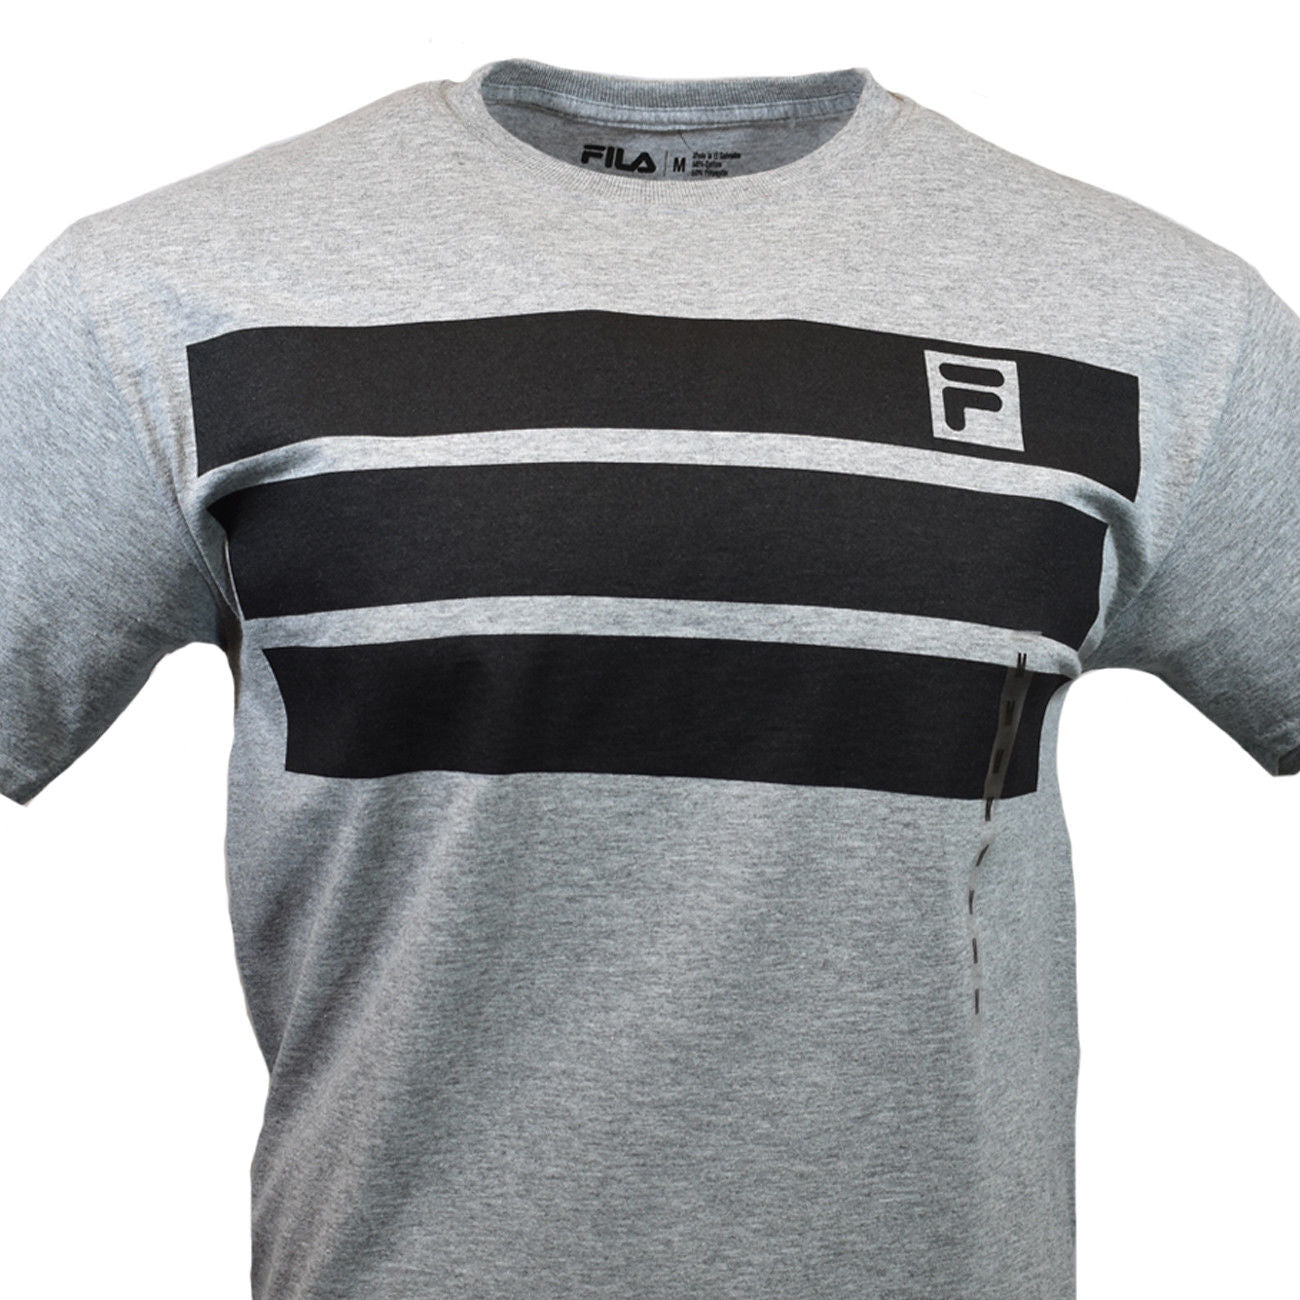 FILA Men's Graphic T-Shirt, 3 Black Stripes , Heather Gray